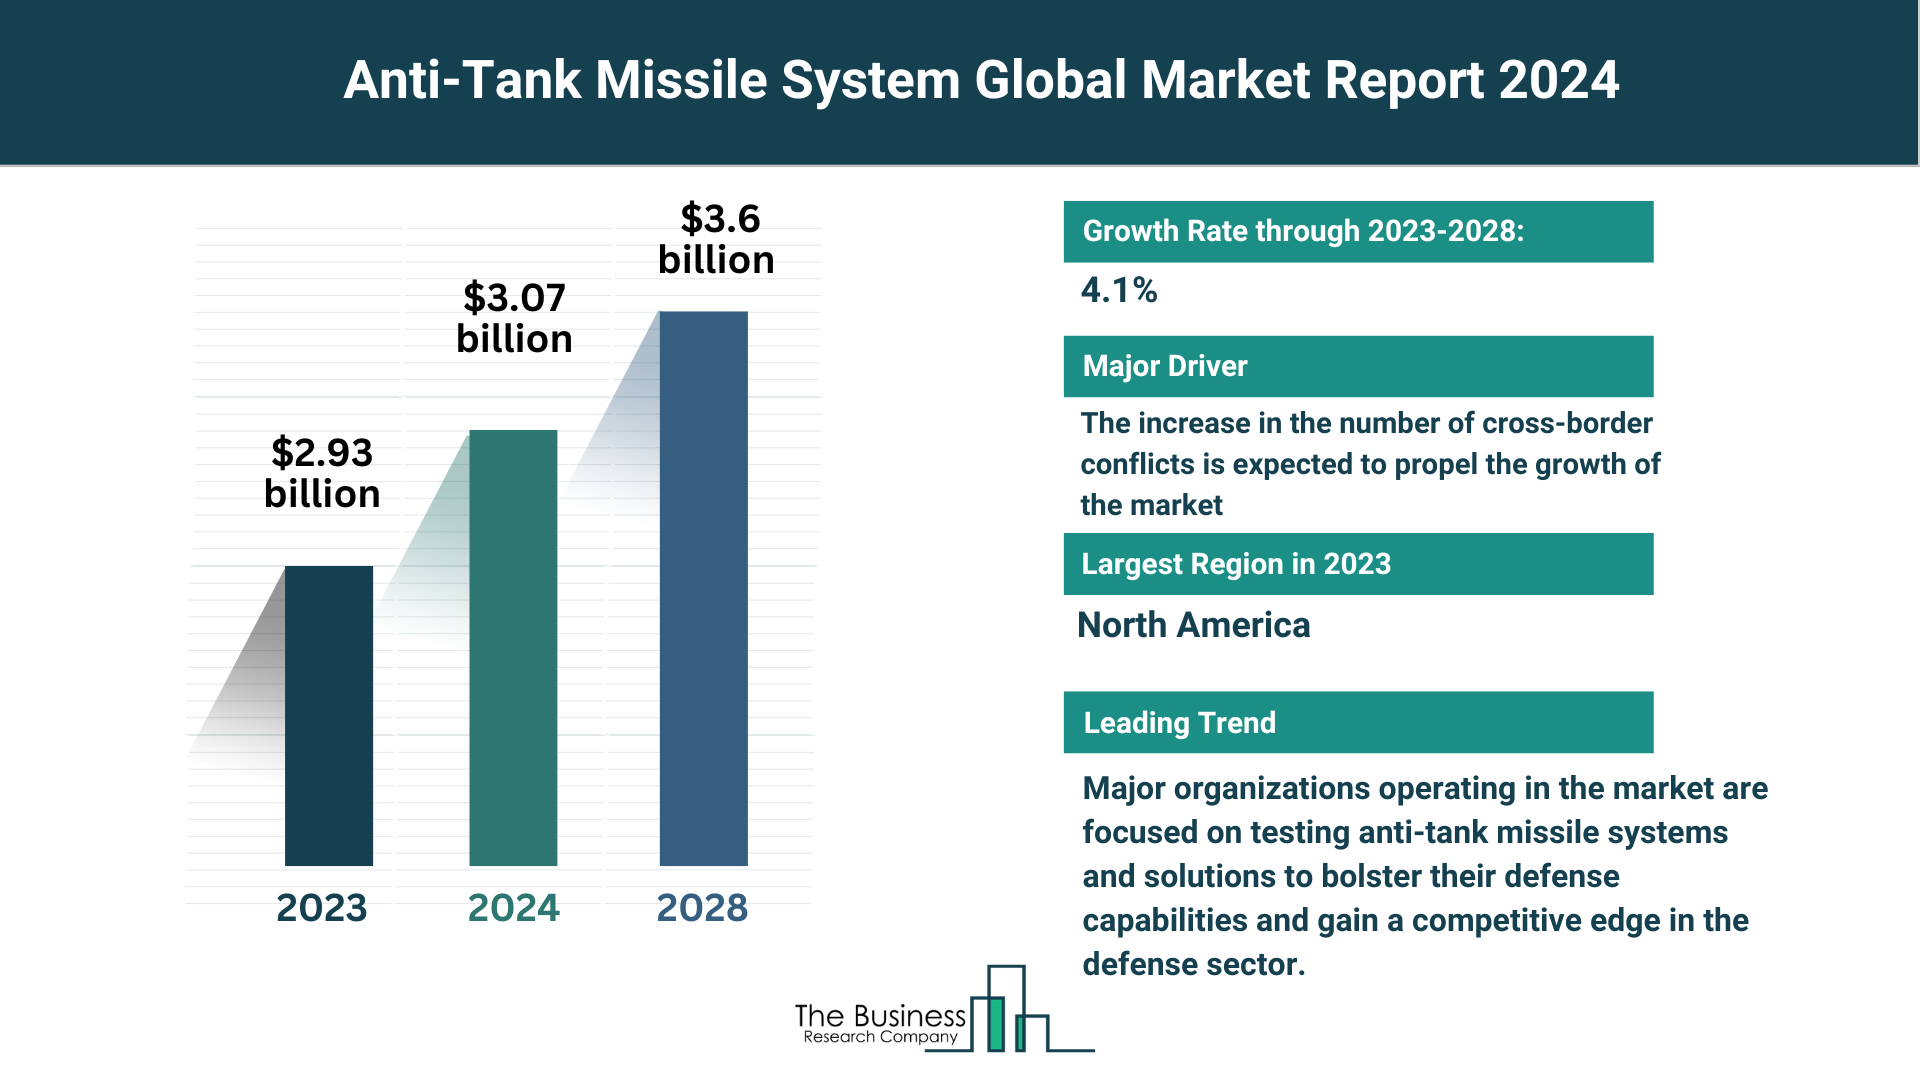 Global Anti-Tank Missile System Market